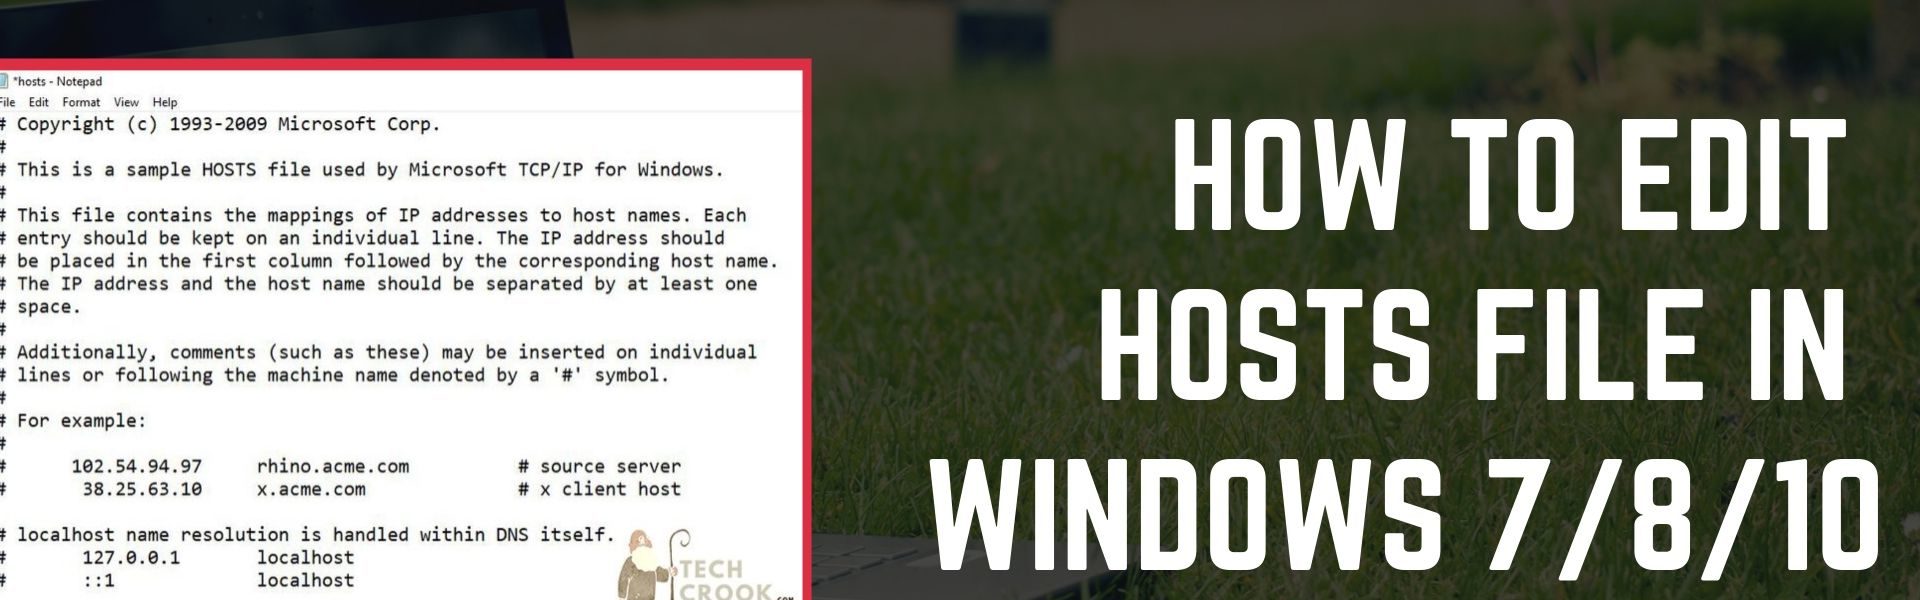 windows 10 hosts file